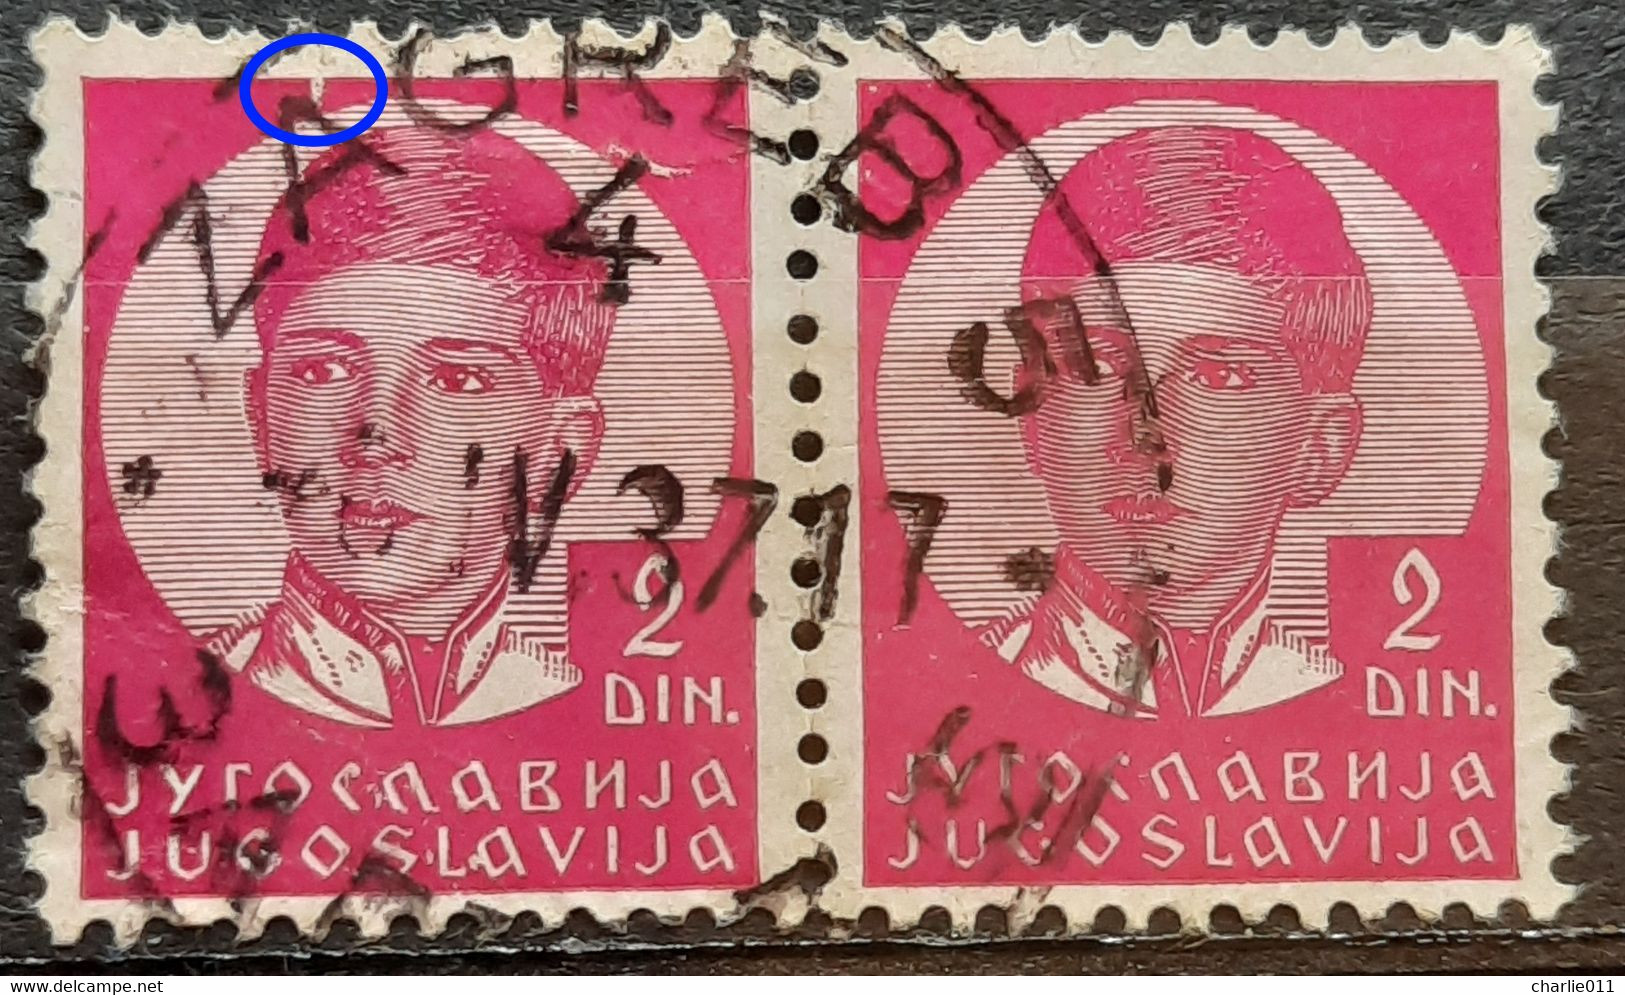 KING PETER II-2 DIN-PAIR-ERROR-BROKEN MARGIN-POSTMARK ZAGREB-CROATIA-YUGOSLAVIA-1935 - Imperforates, Proofs & Errors